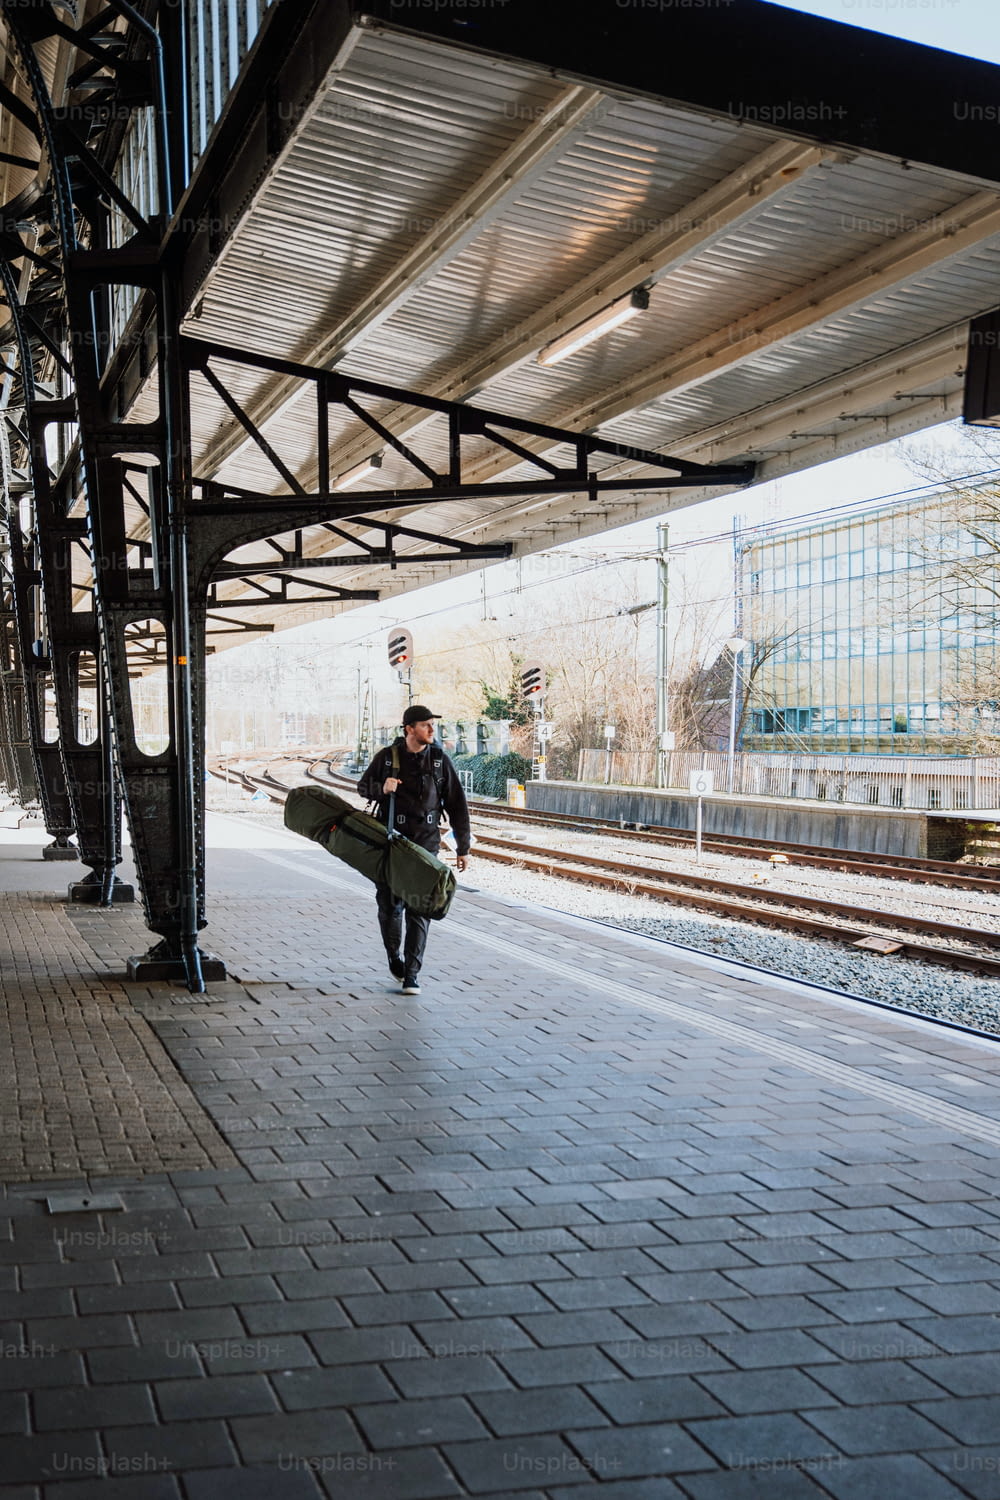 a man with a surfboard walking down a train platform